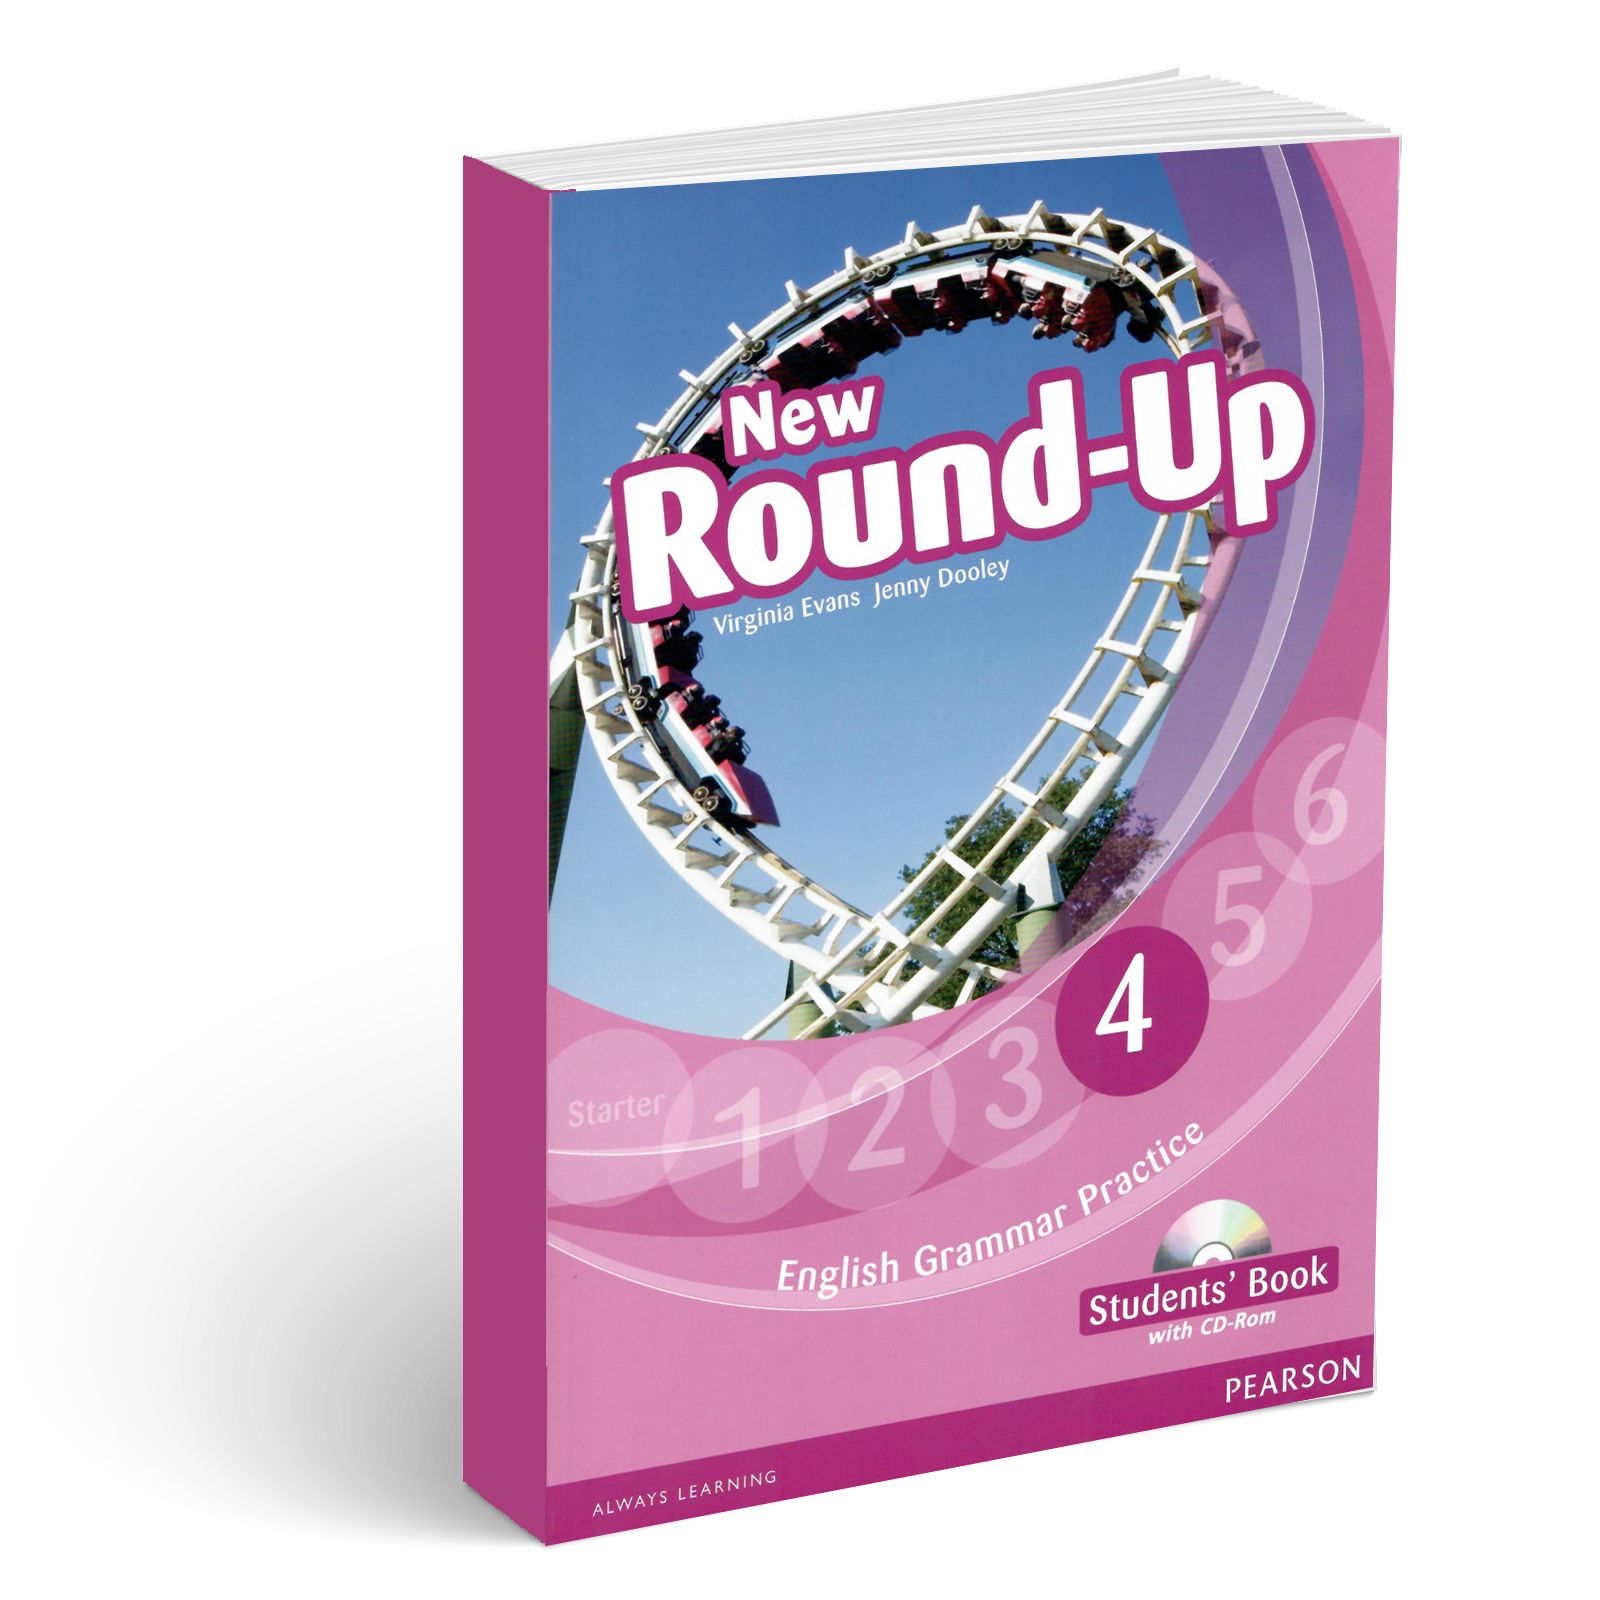 New Round-up от Pearson. Round up 4. Английский New Round up Starter. New round up 4 book